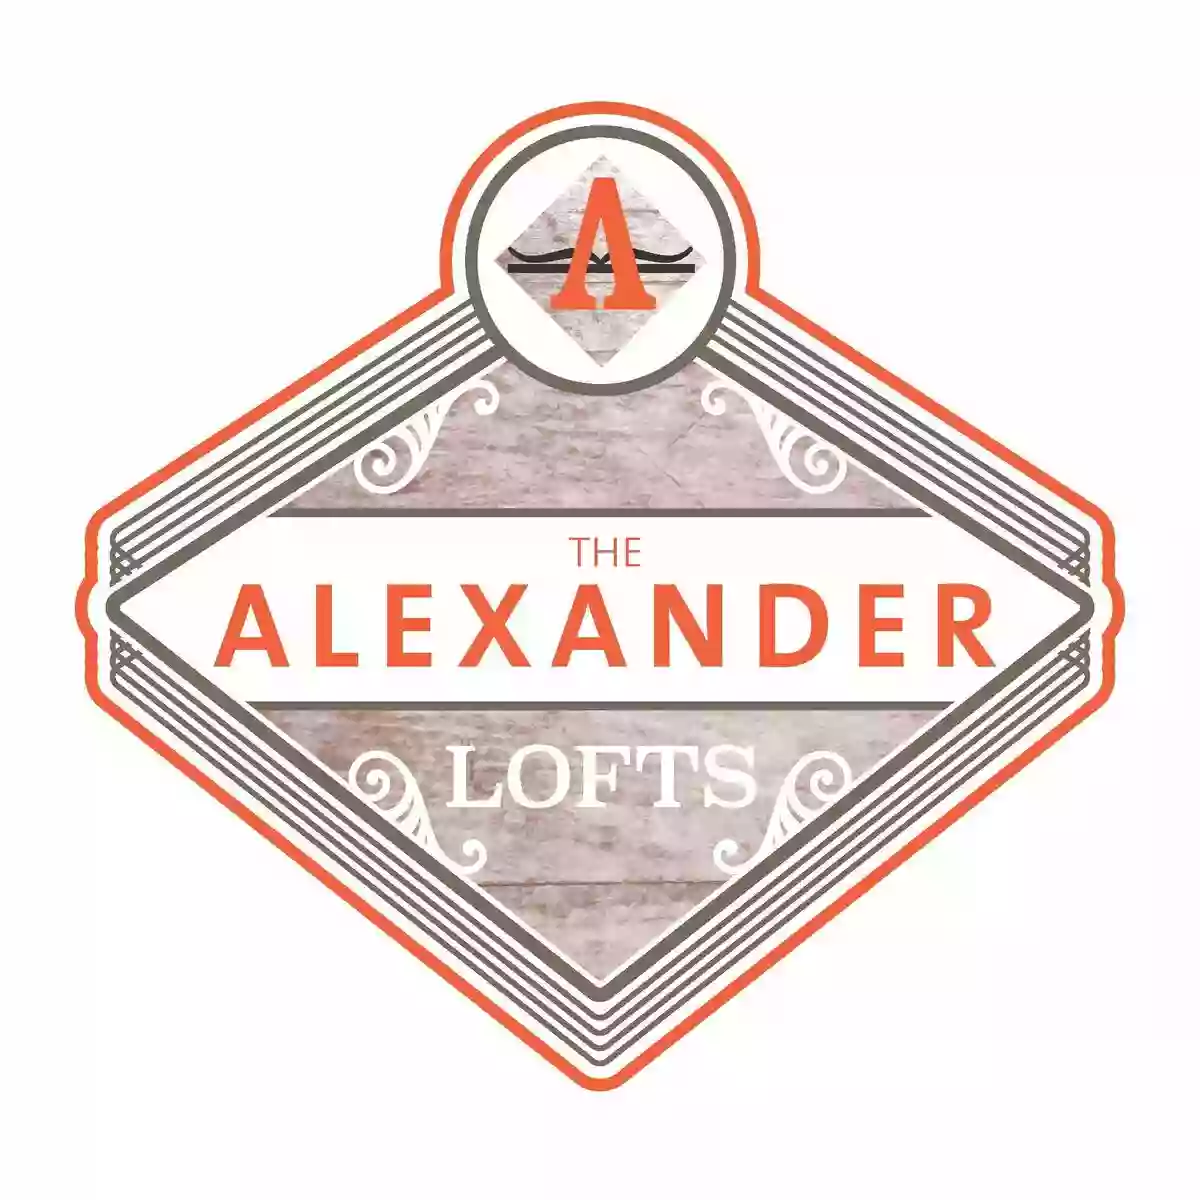 The Alexander Lofts